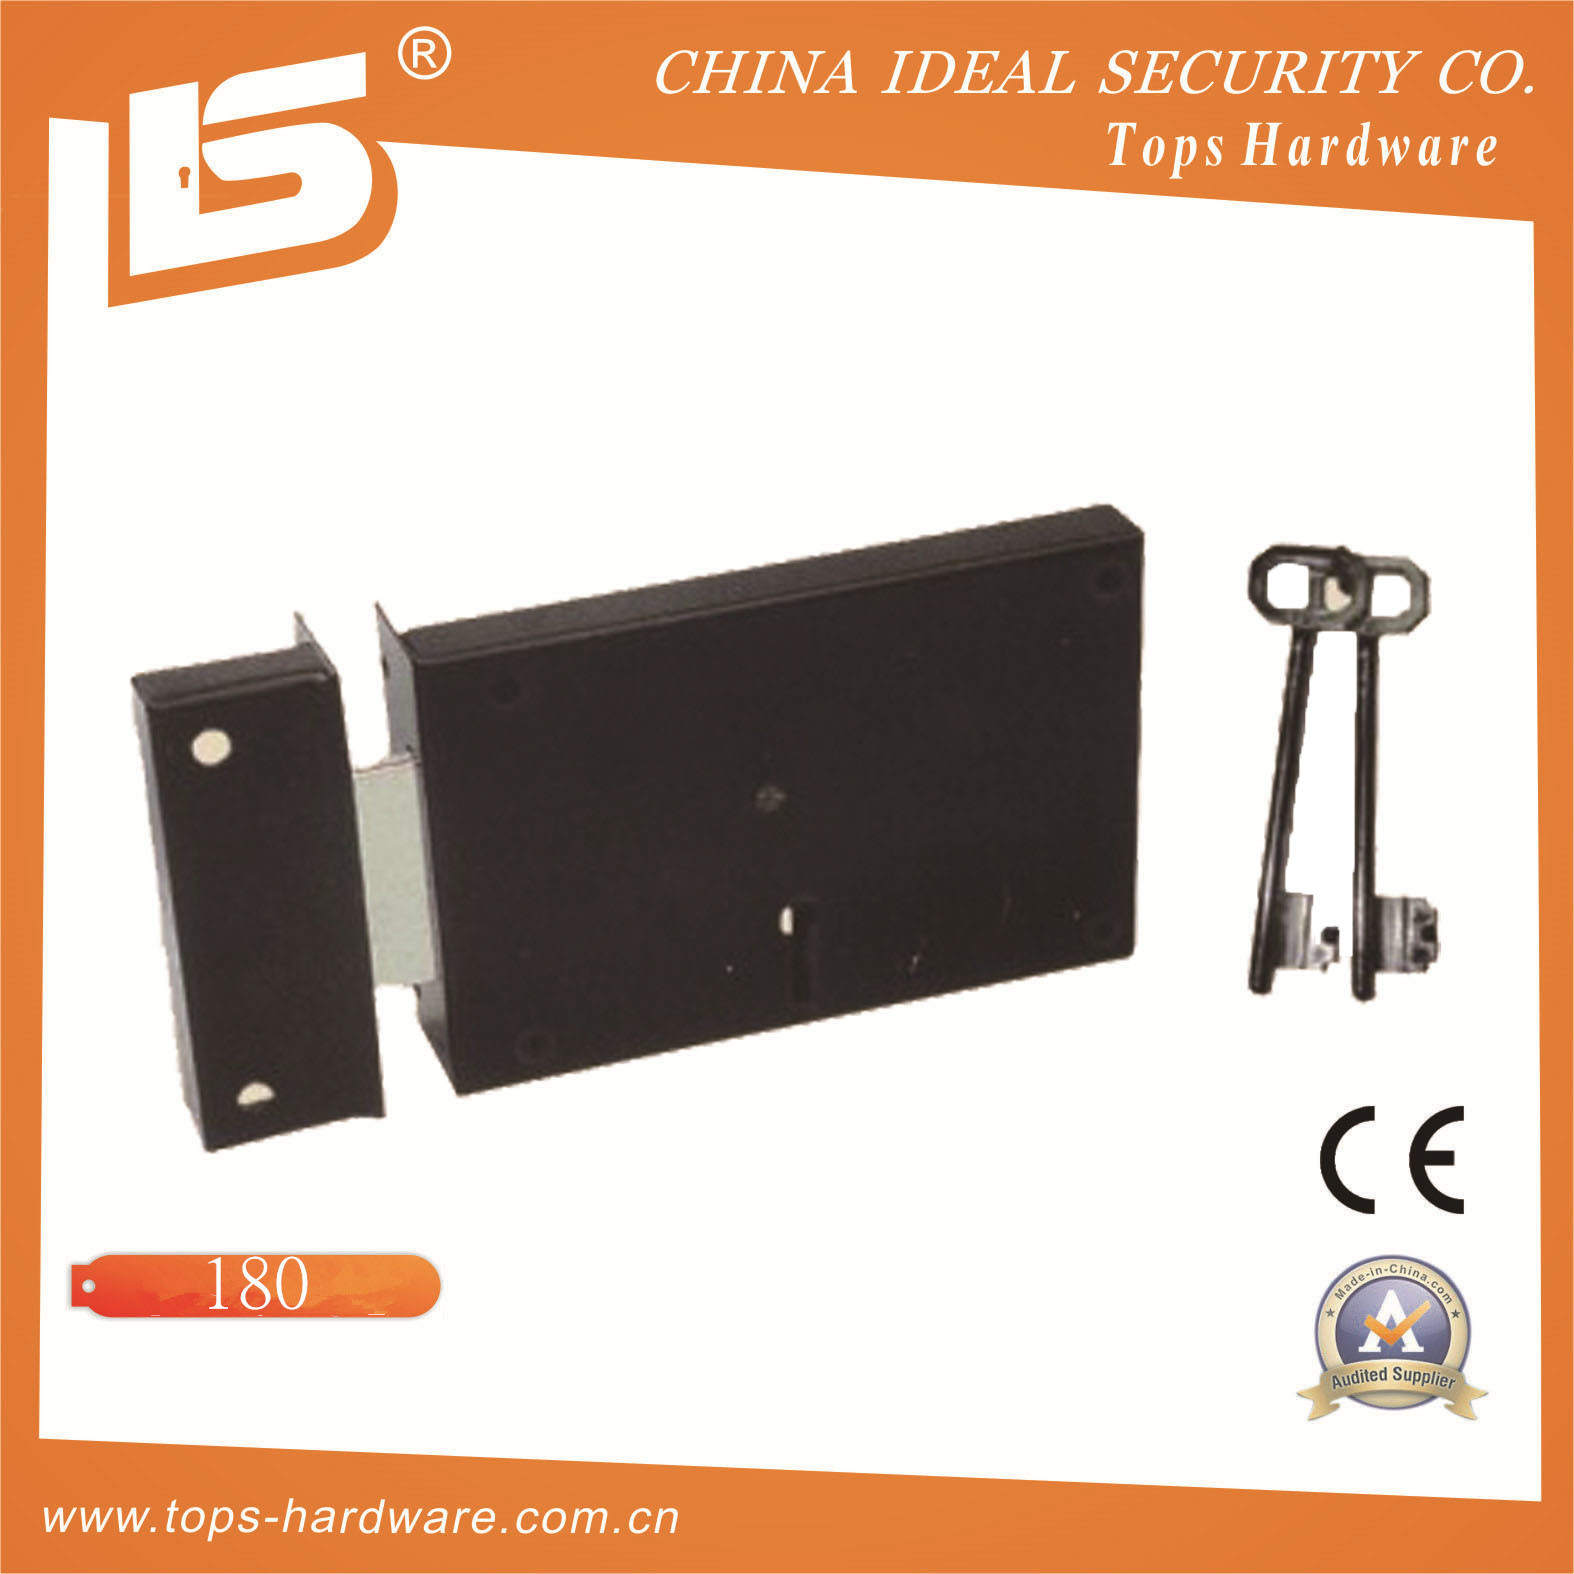 Security High Quality Door Rim Lock (180)